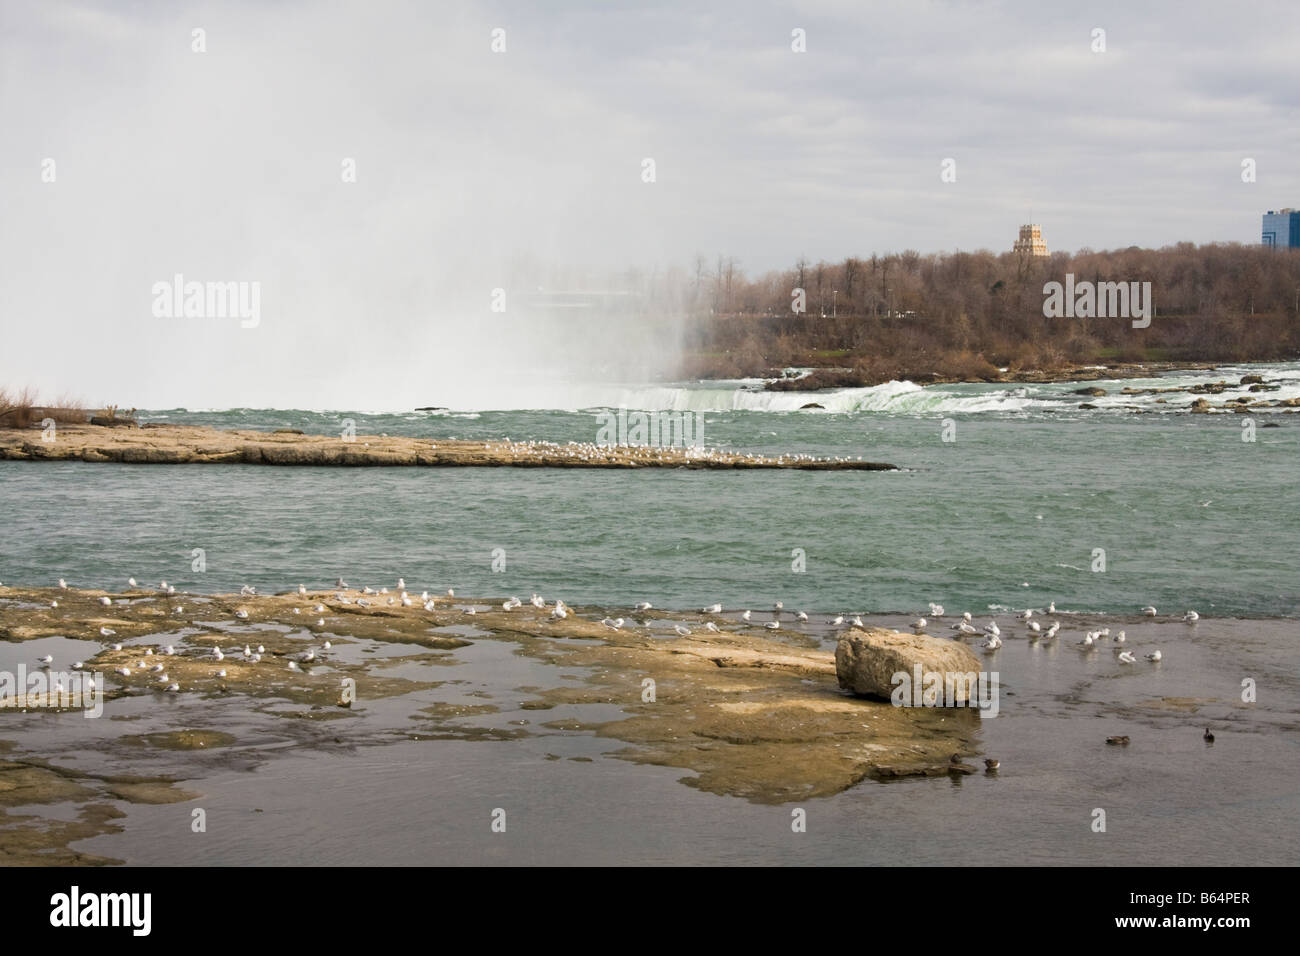 The Horseshoe Falls - Niagara Falls, Ontario, Canada Stock Photo